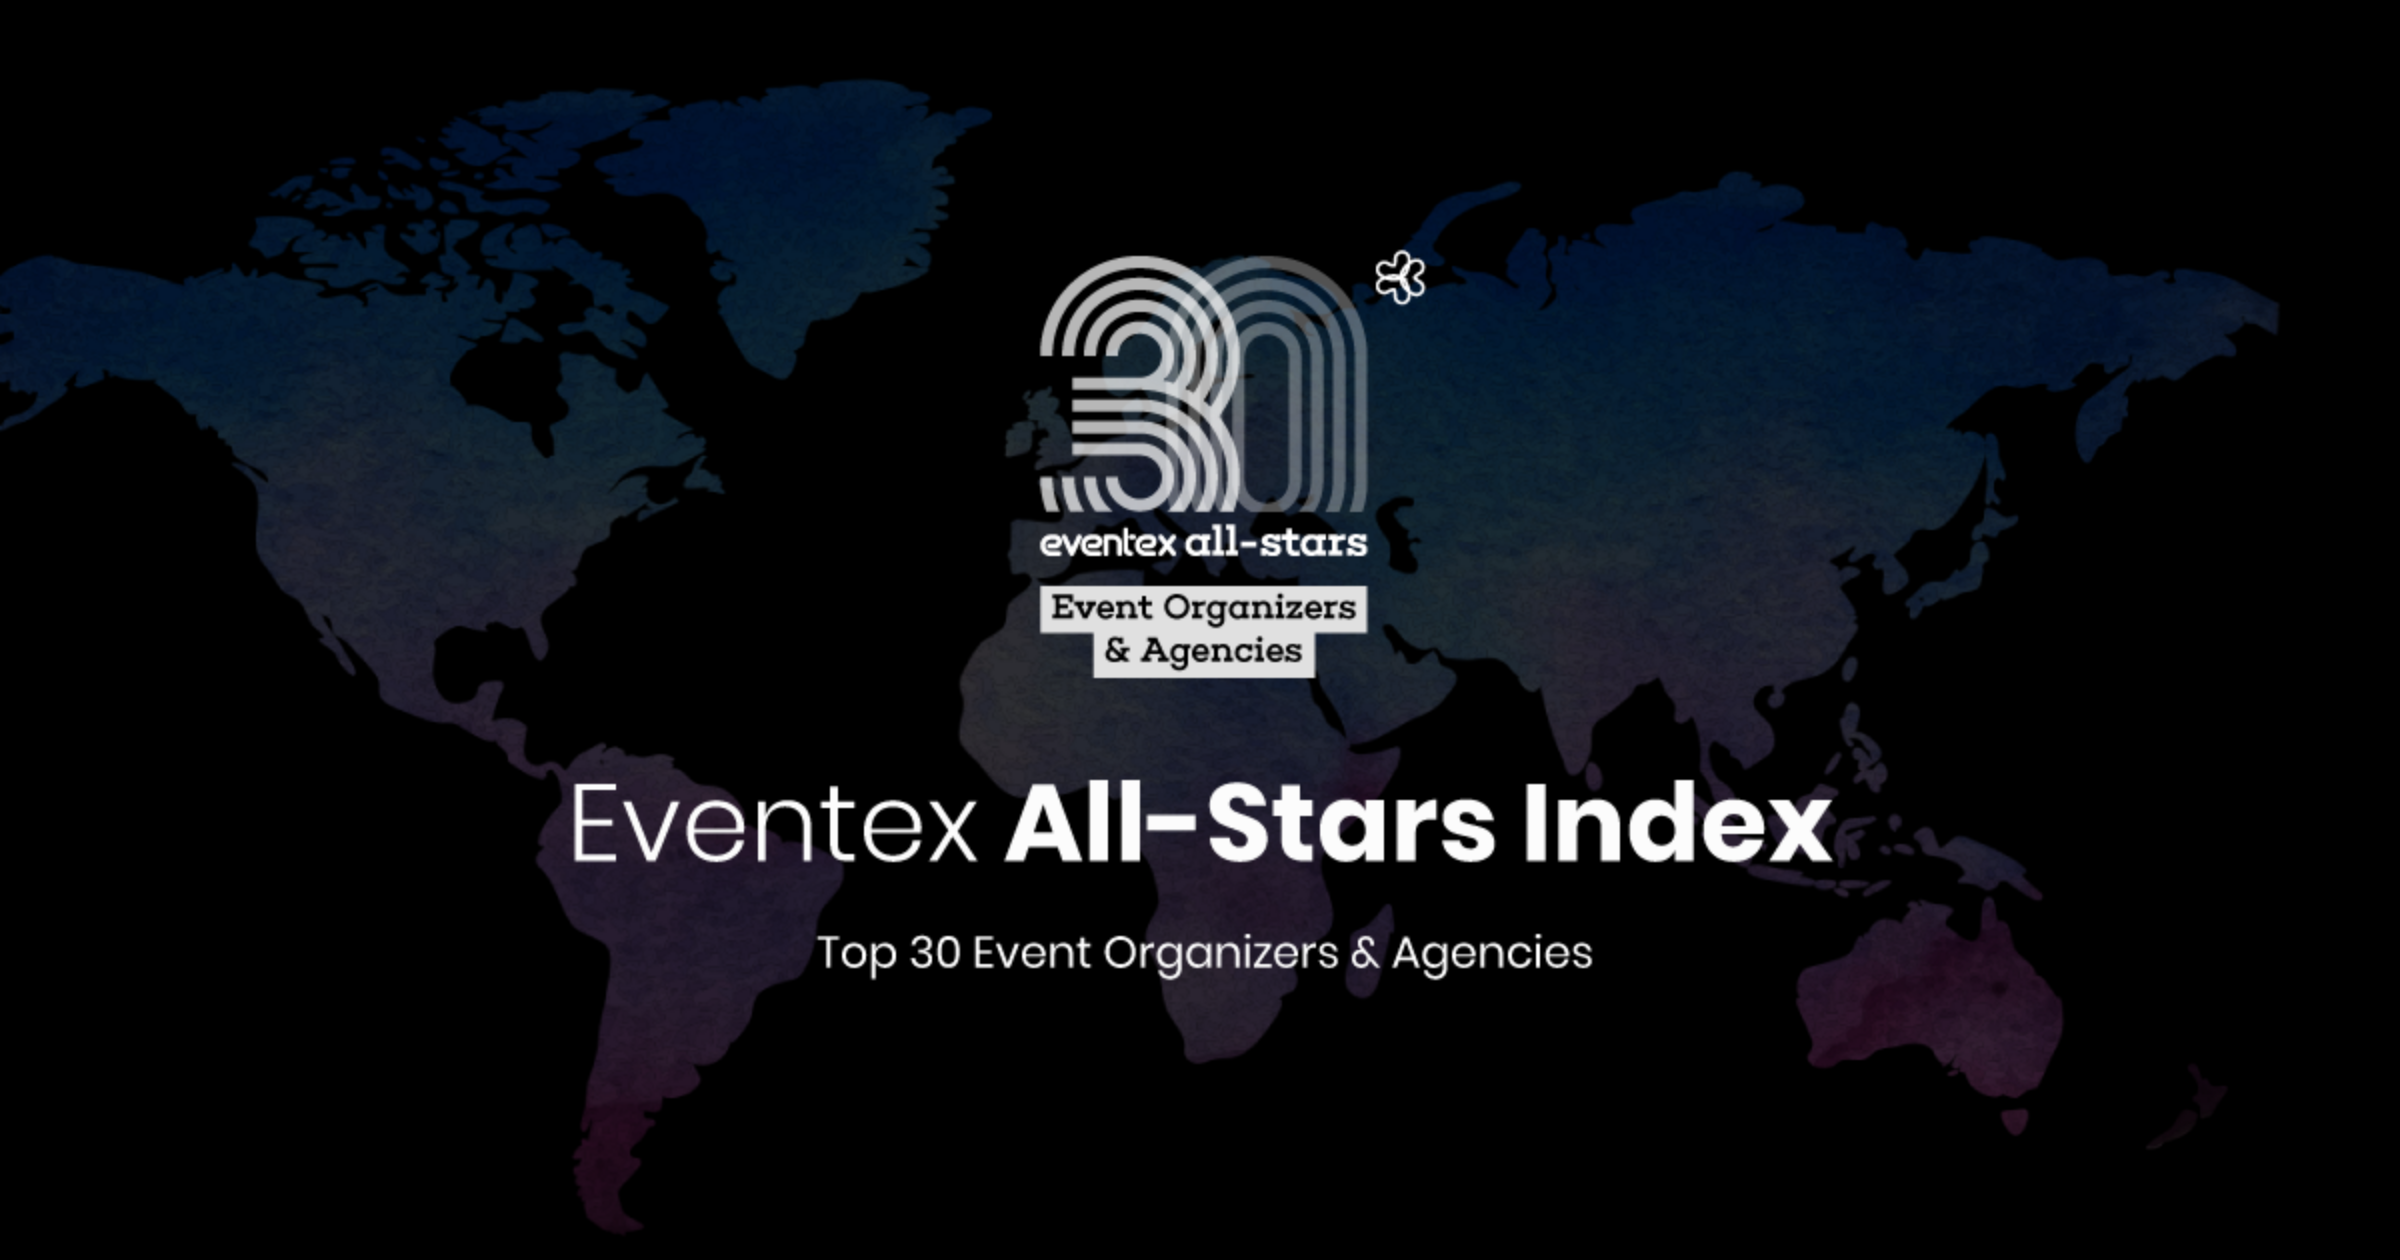 All Stars Index 2019 Facebook